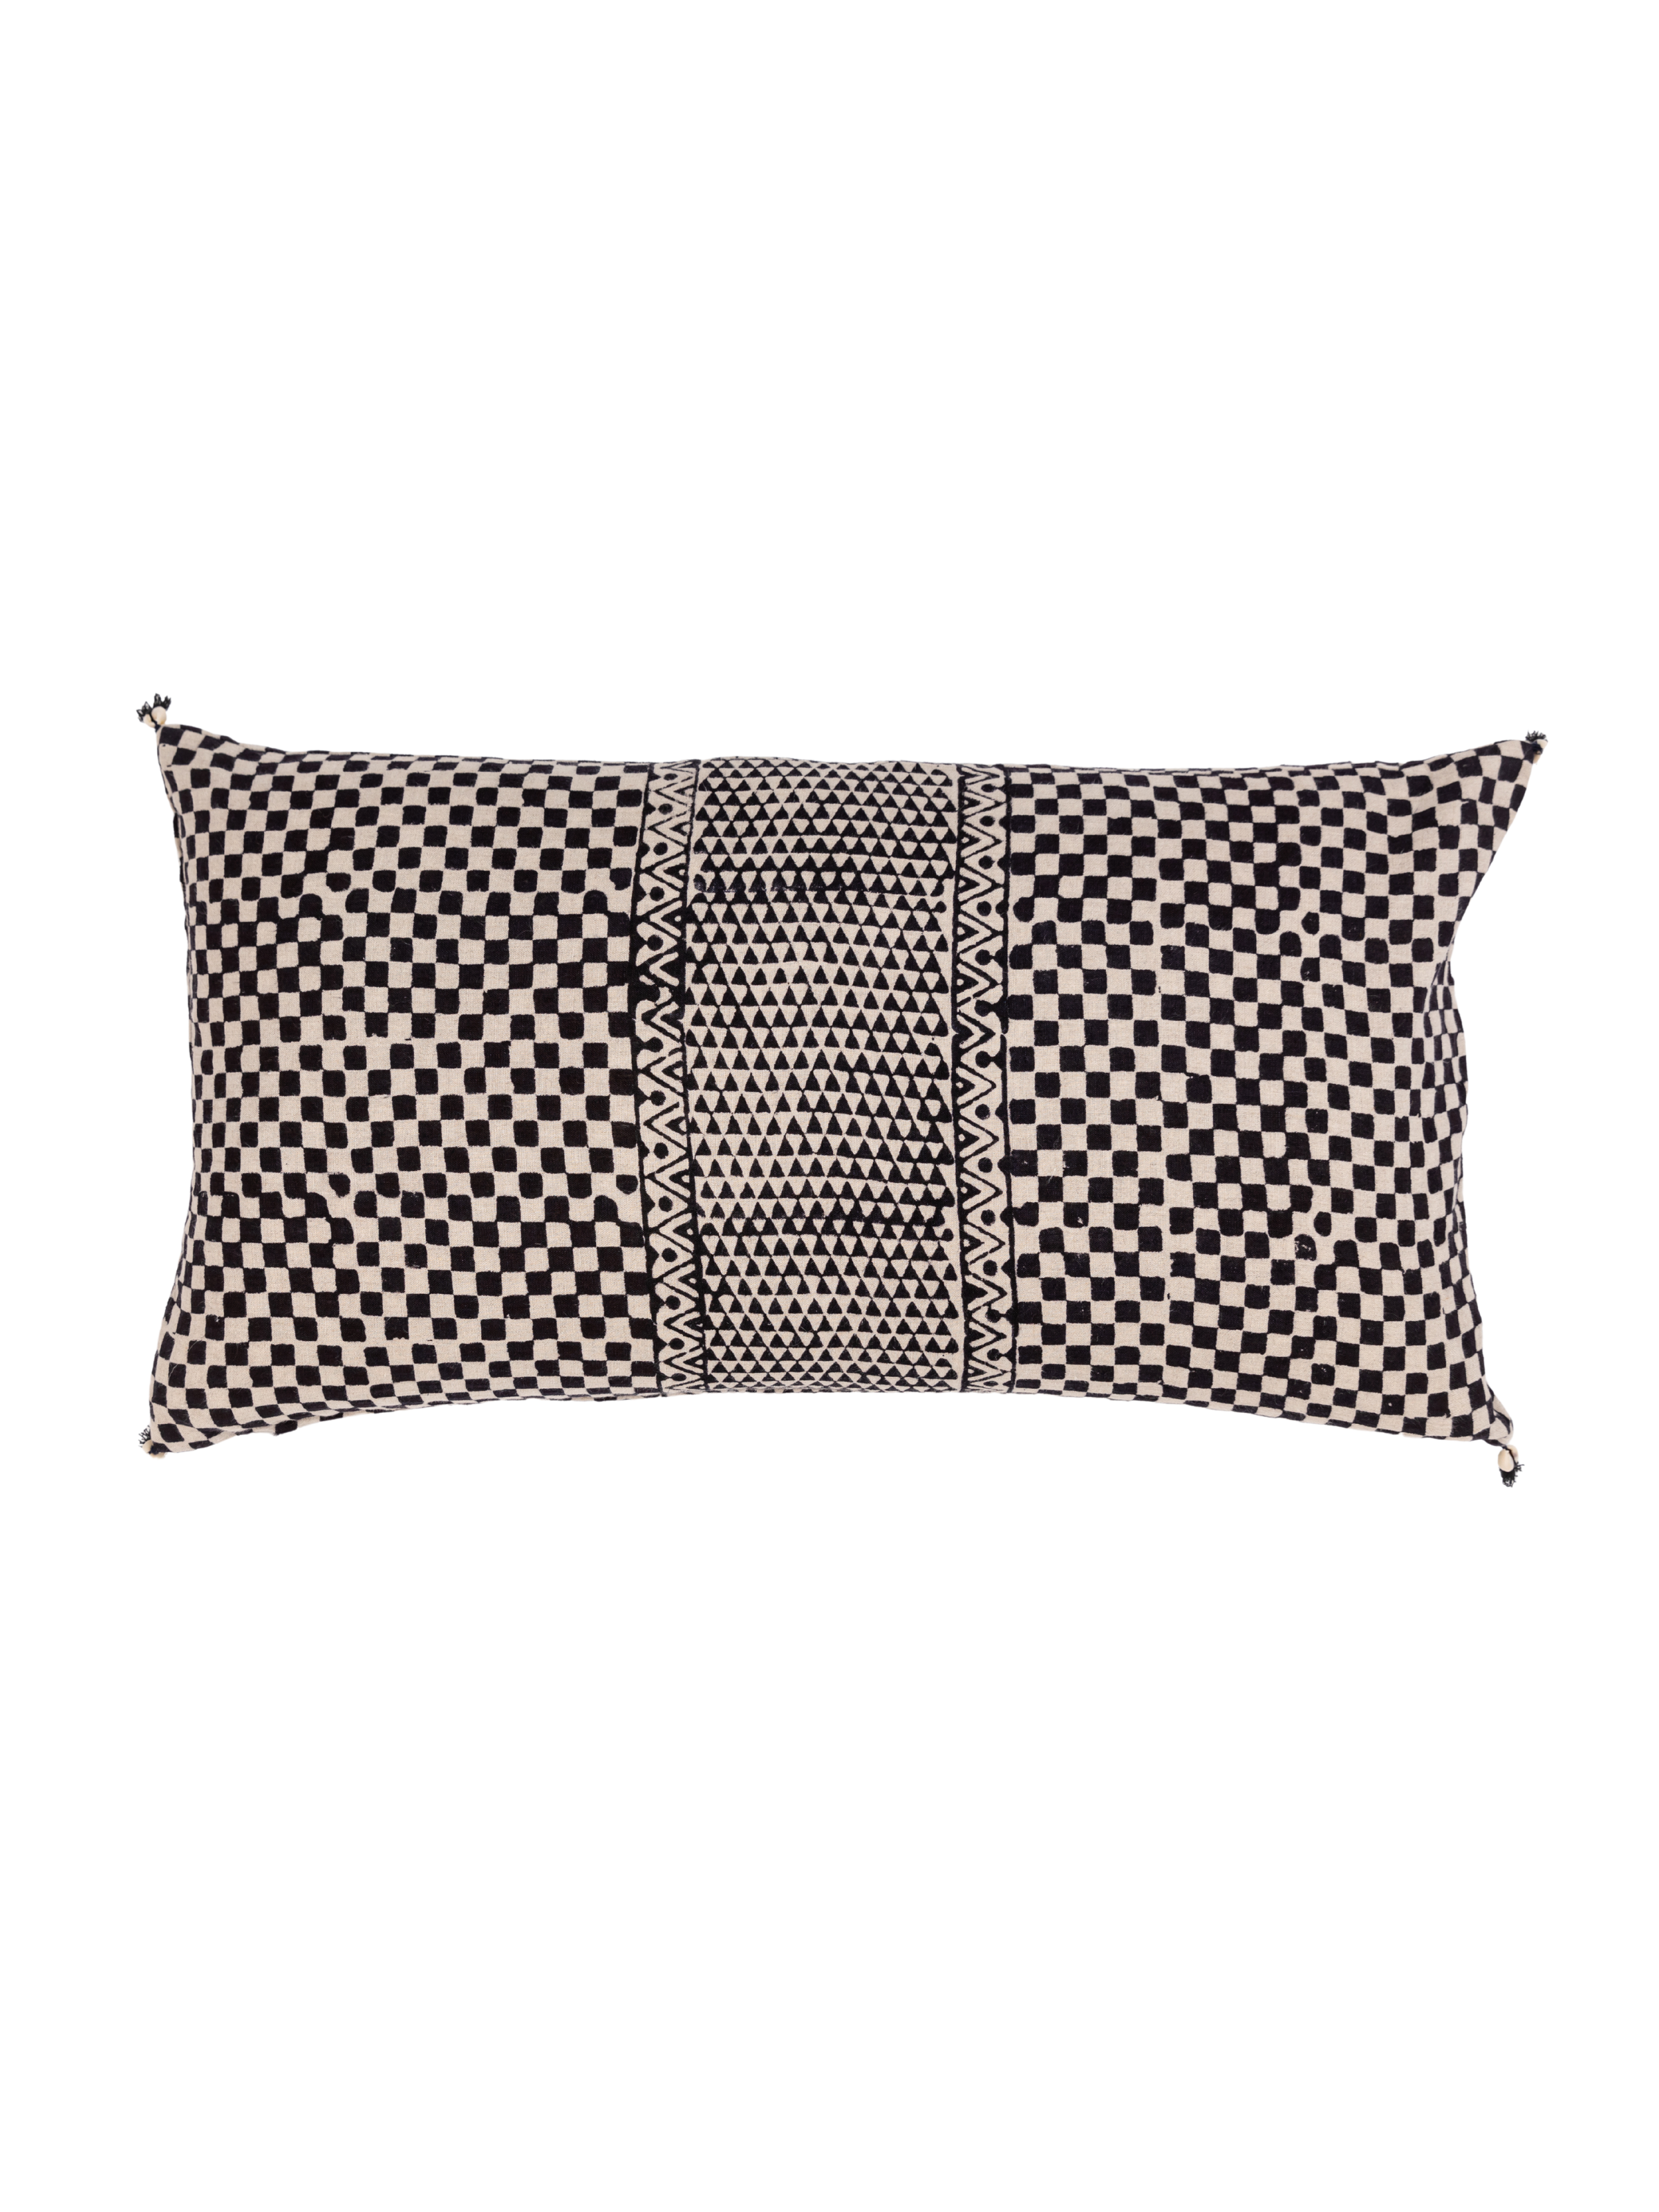 Samburu Charcoal Lumbar Pillow Cover